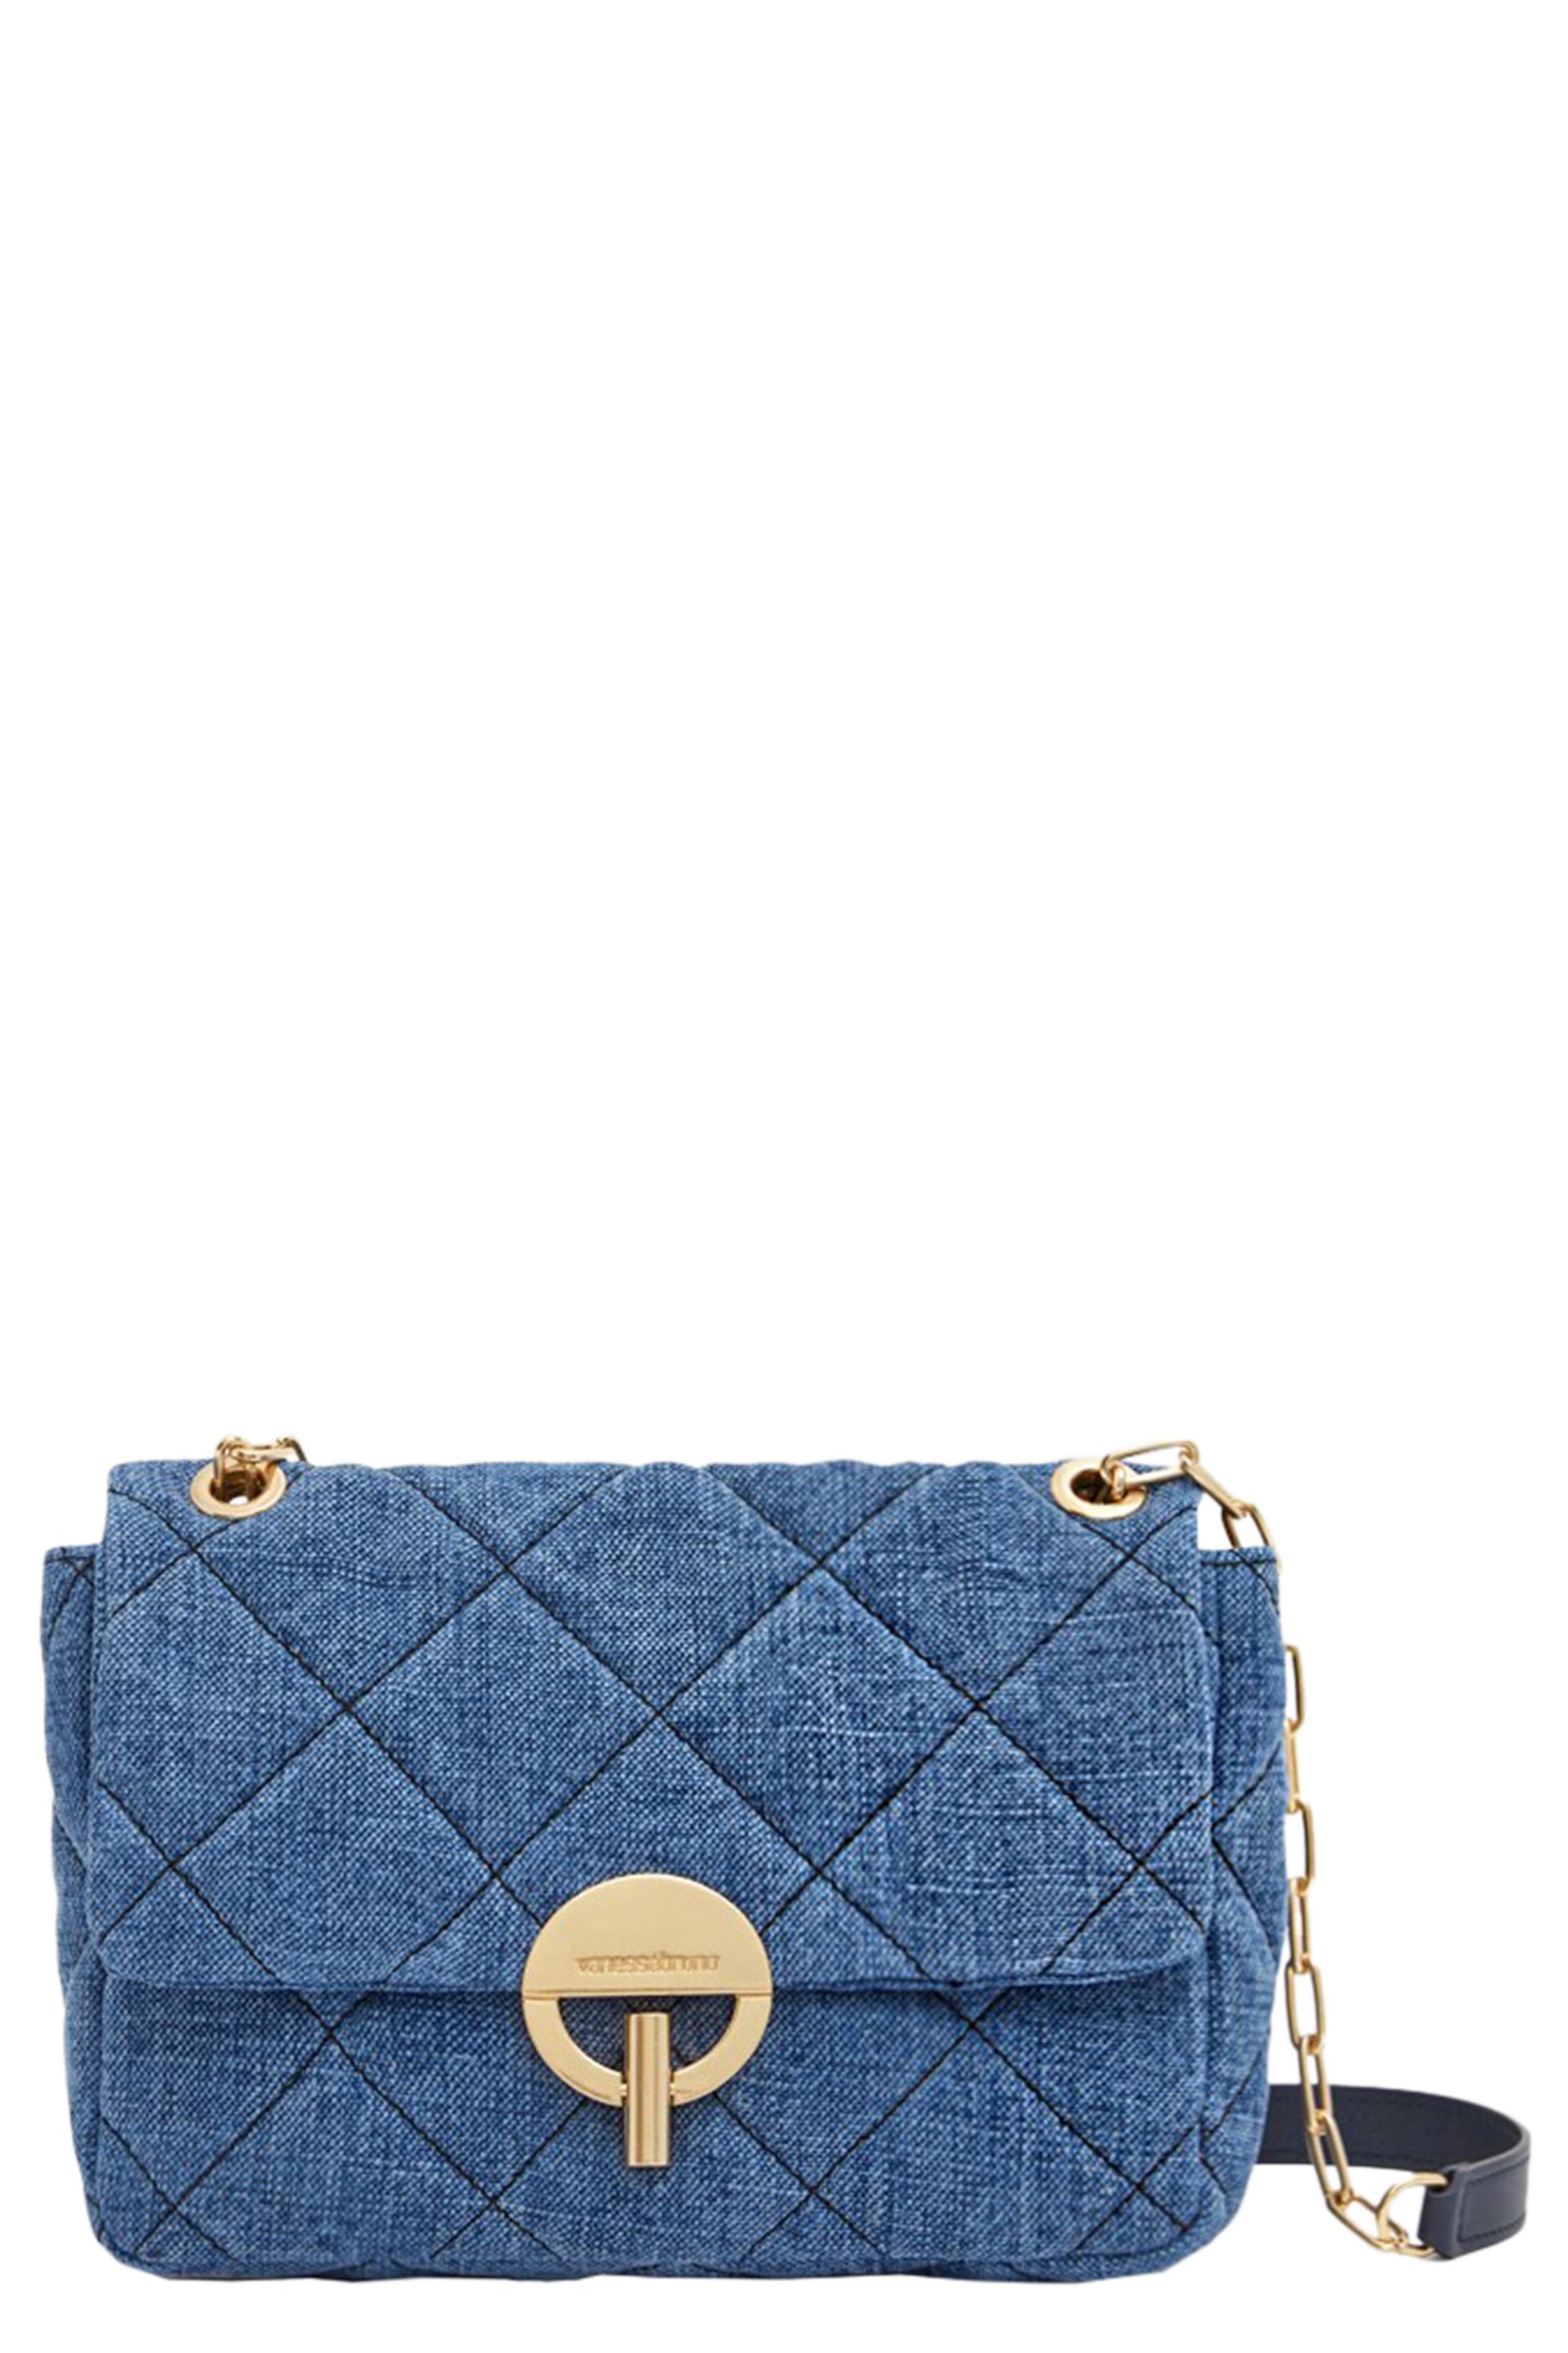 Louis Vuitton Resort 2023 Collection - Indigo Blue Style